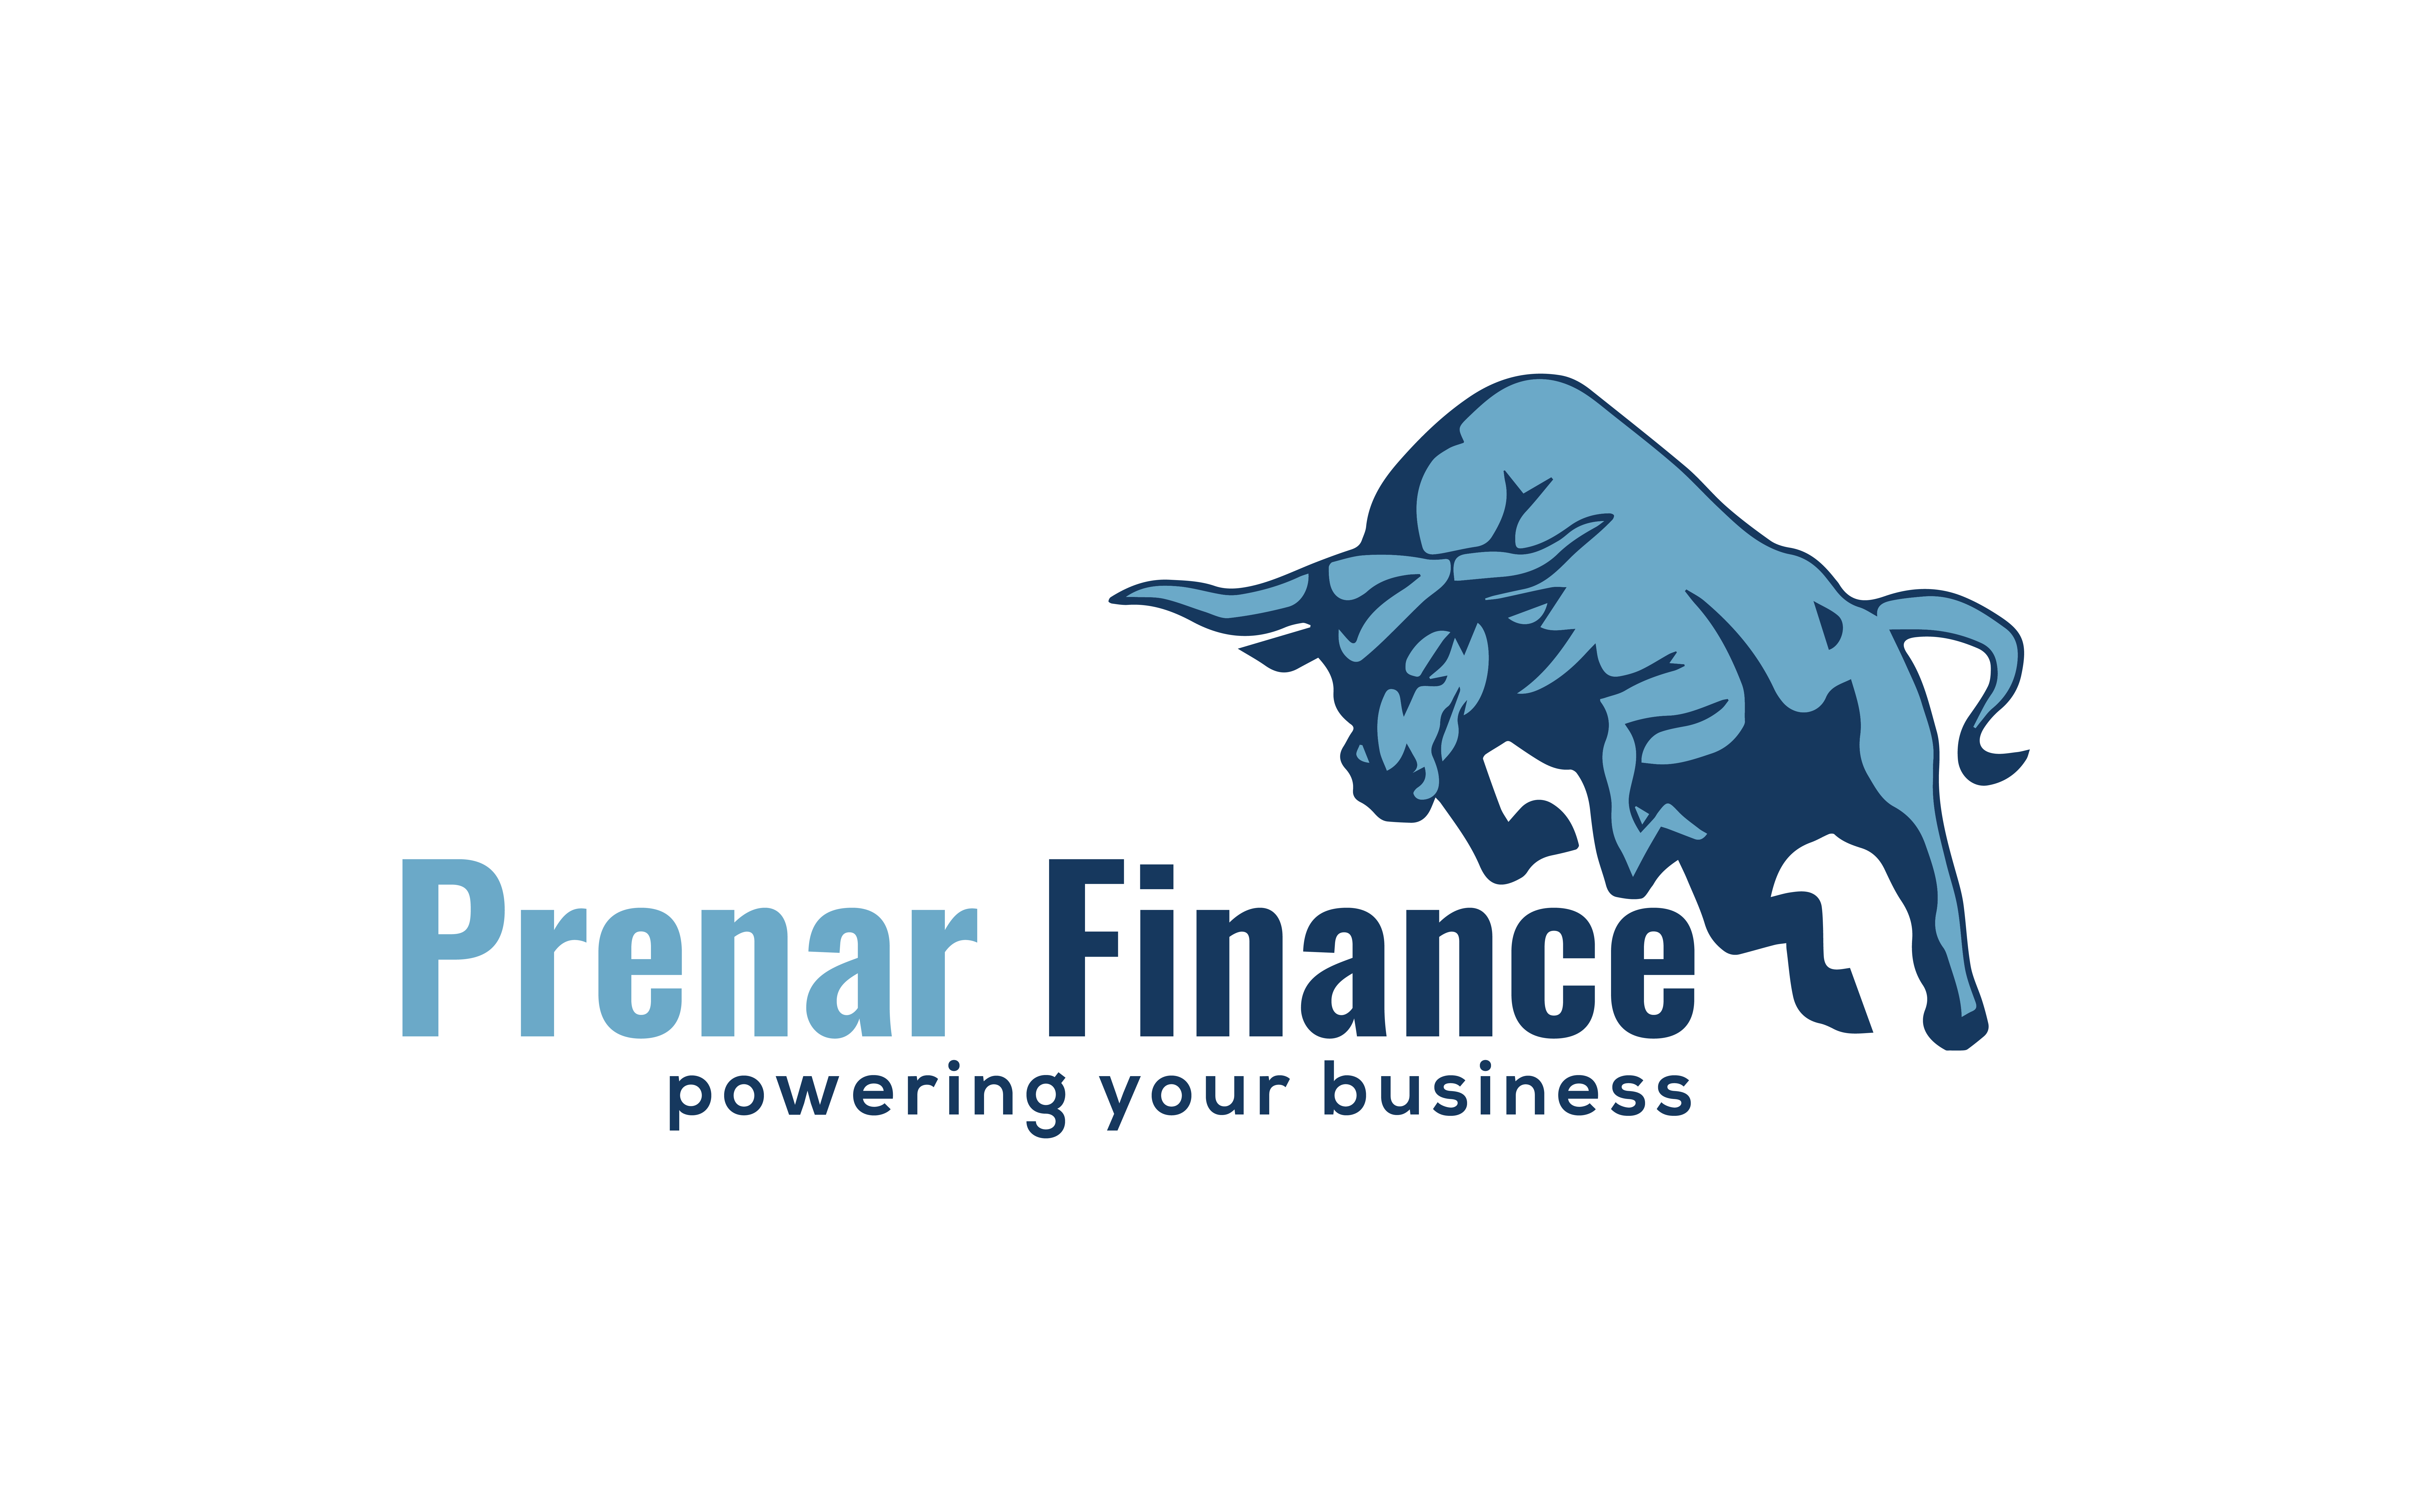 Prenar Finance